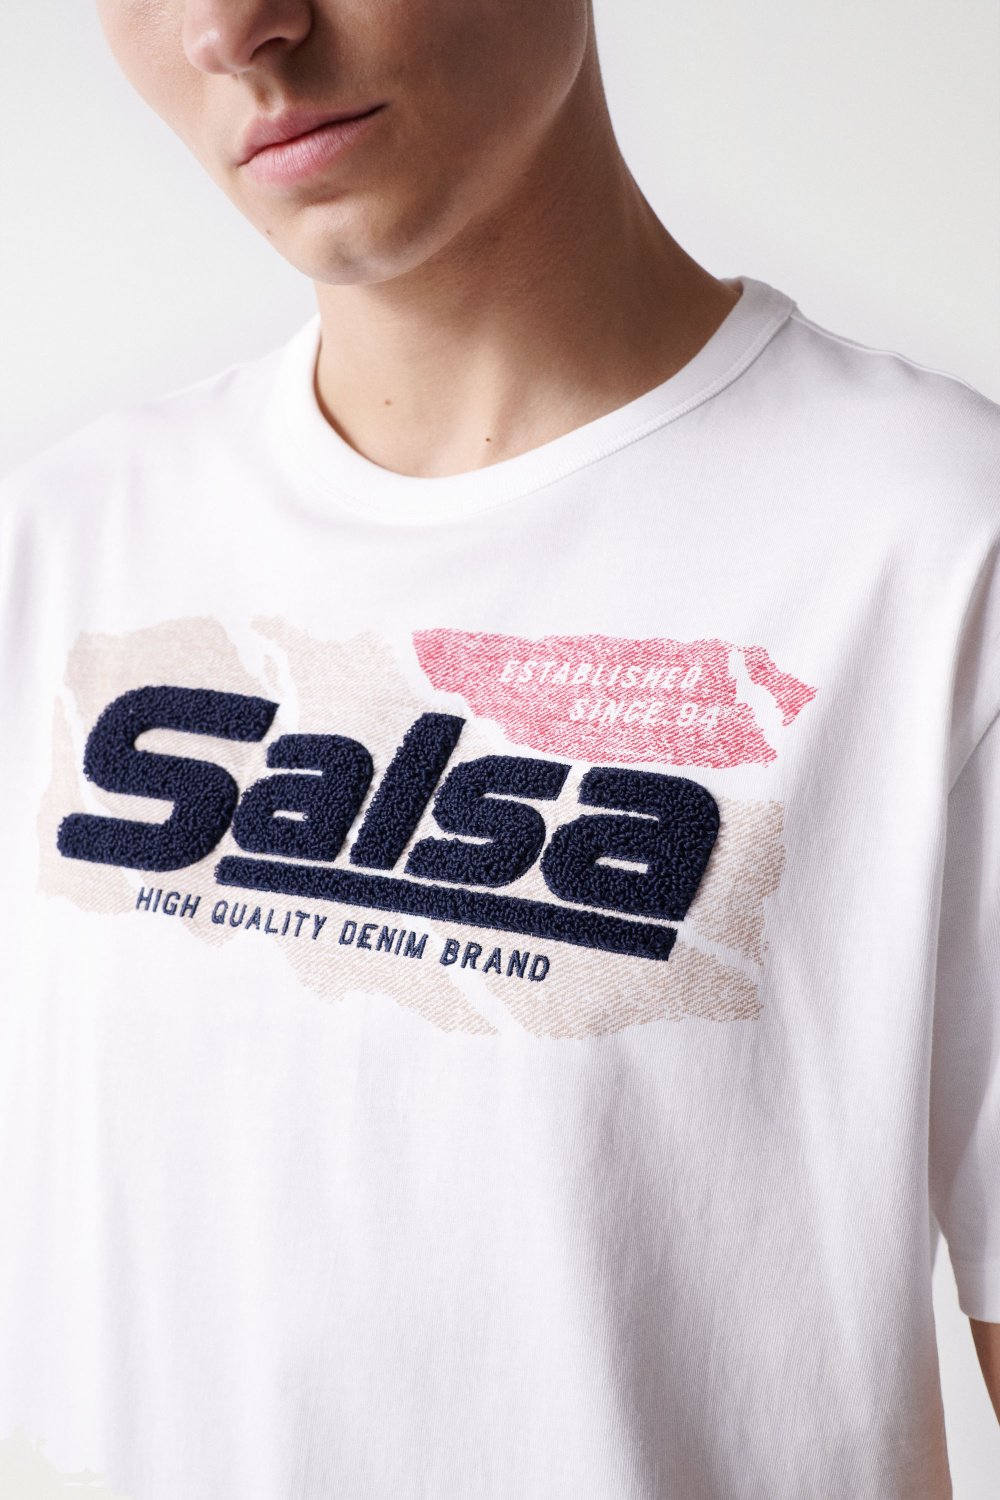 T-SHIRT WITH SALSA NAME AND DESIGN - Salsa